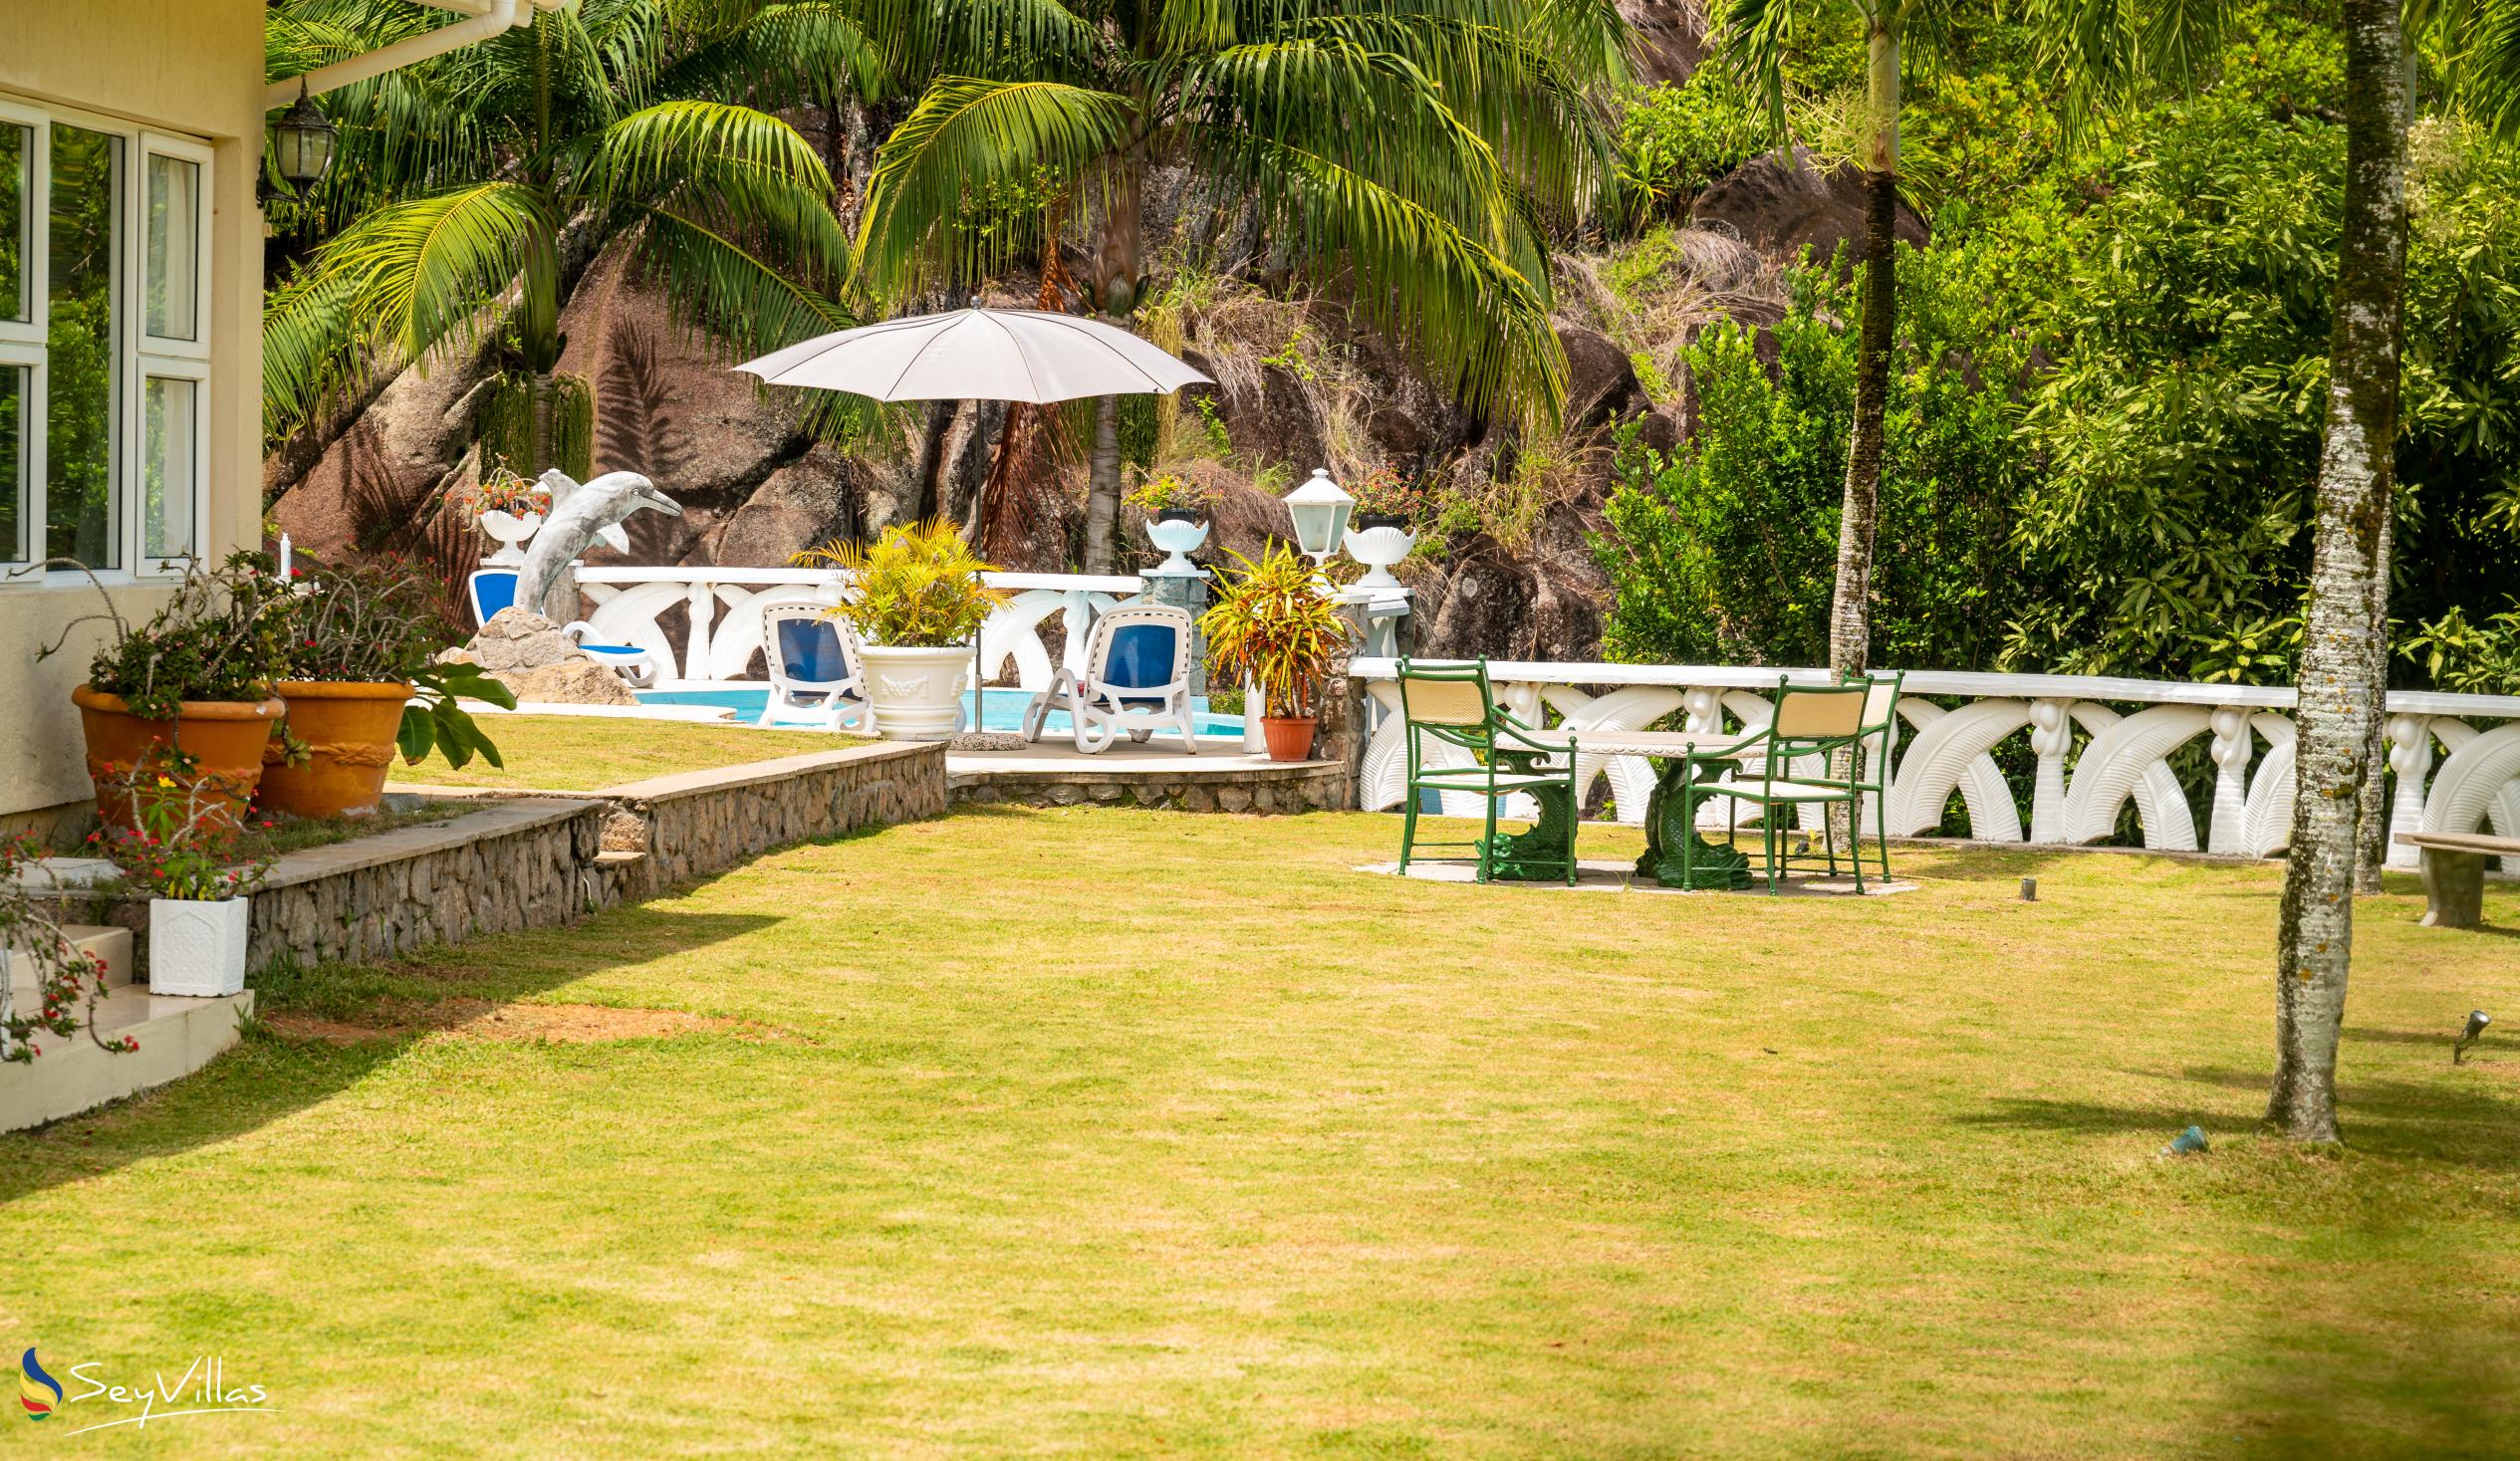 Foto 23: Villa Gazebo - Aussenbereich - Mahé (Seychellen)